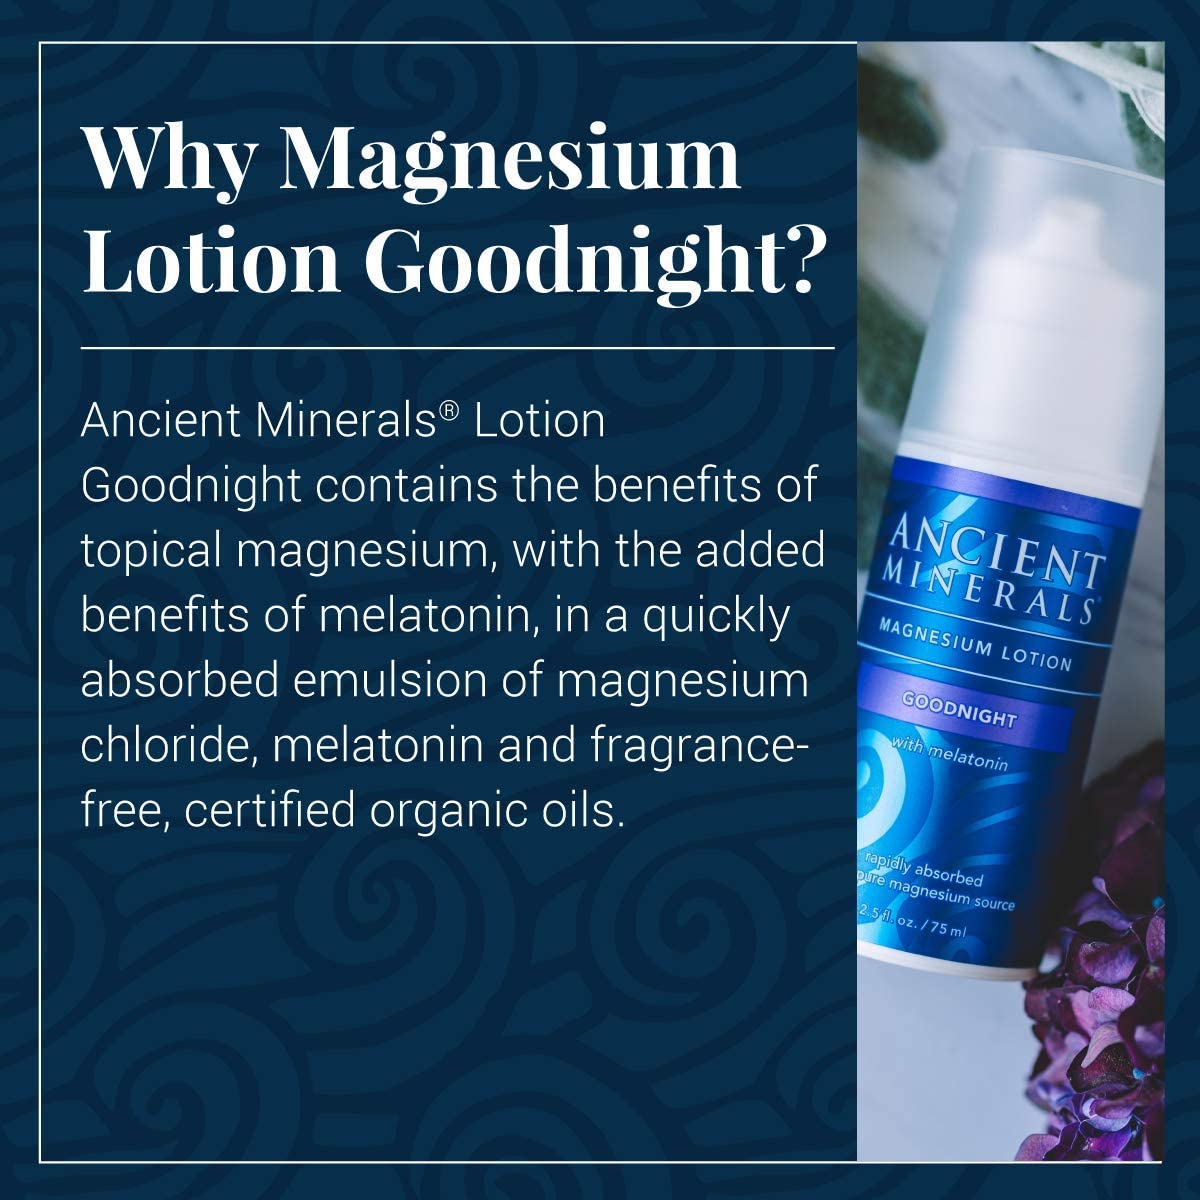 Magnesium Lotion Goodnight